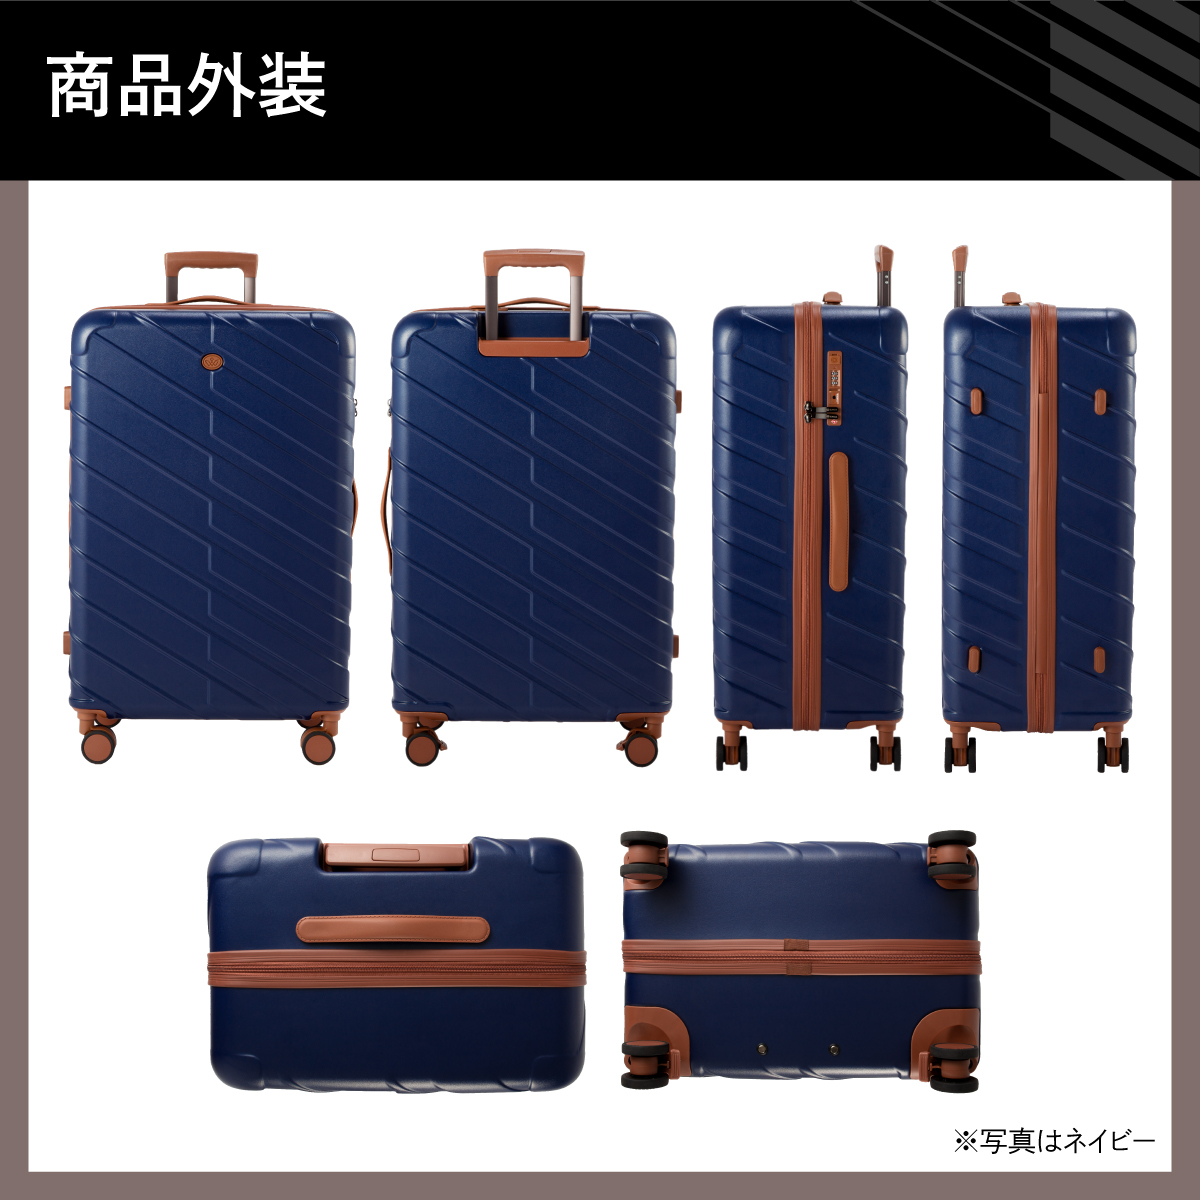 &WEAR スーツケース Lサイズ ストッパー付き 軽量 高機能 高品質 大 